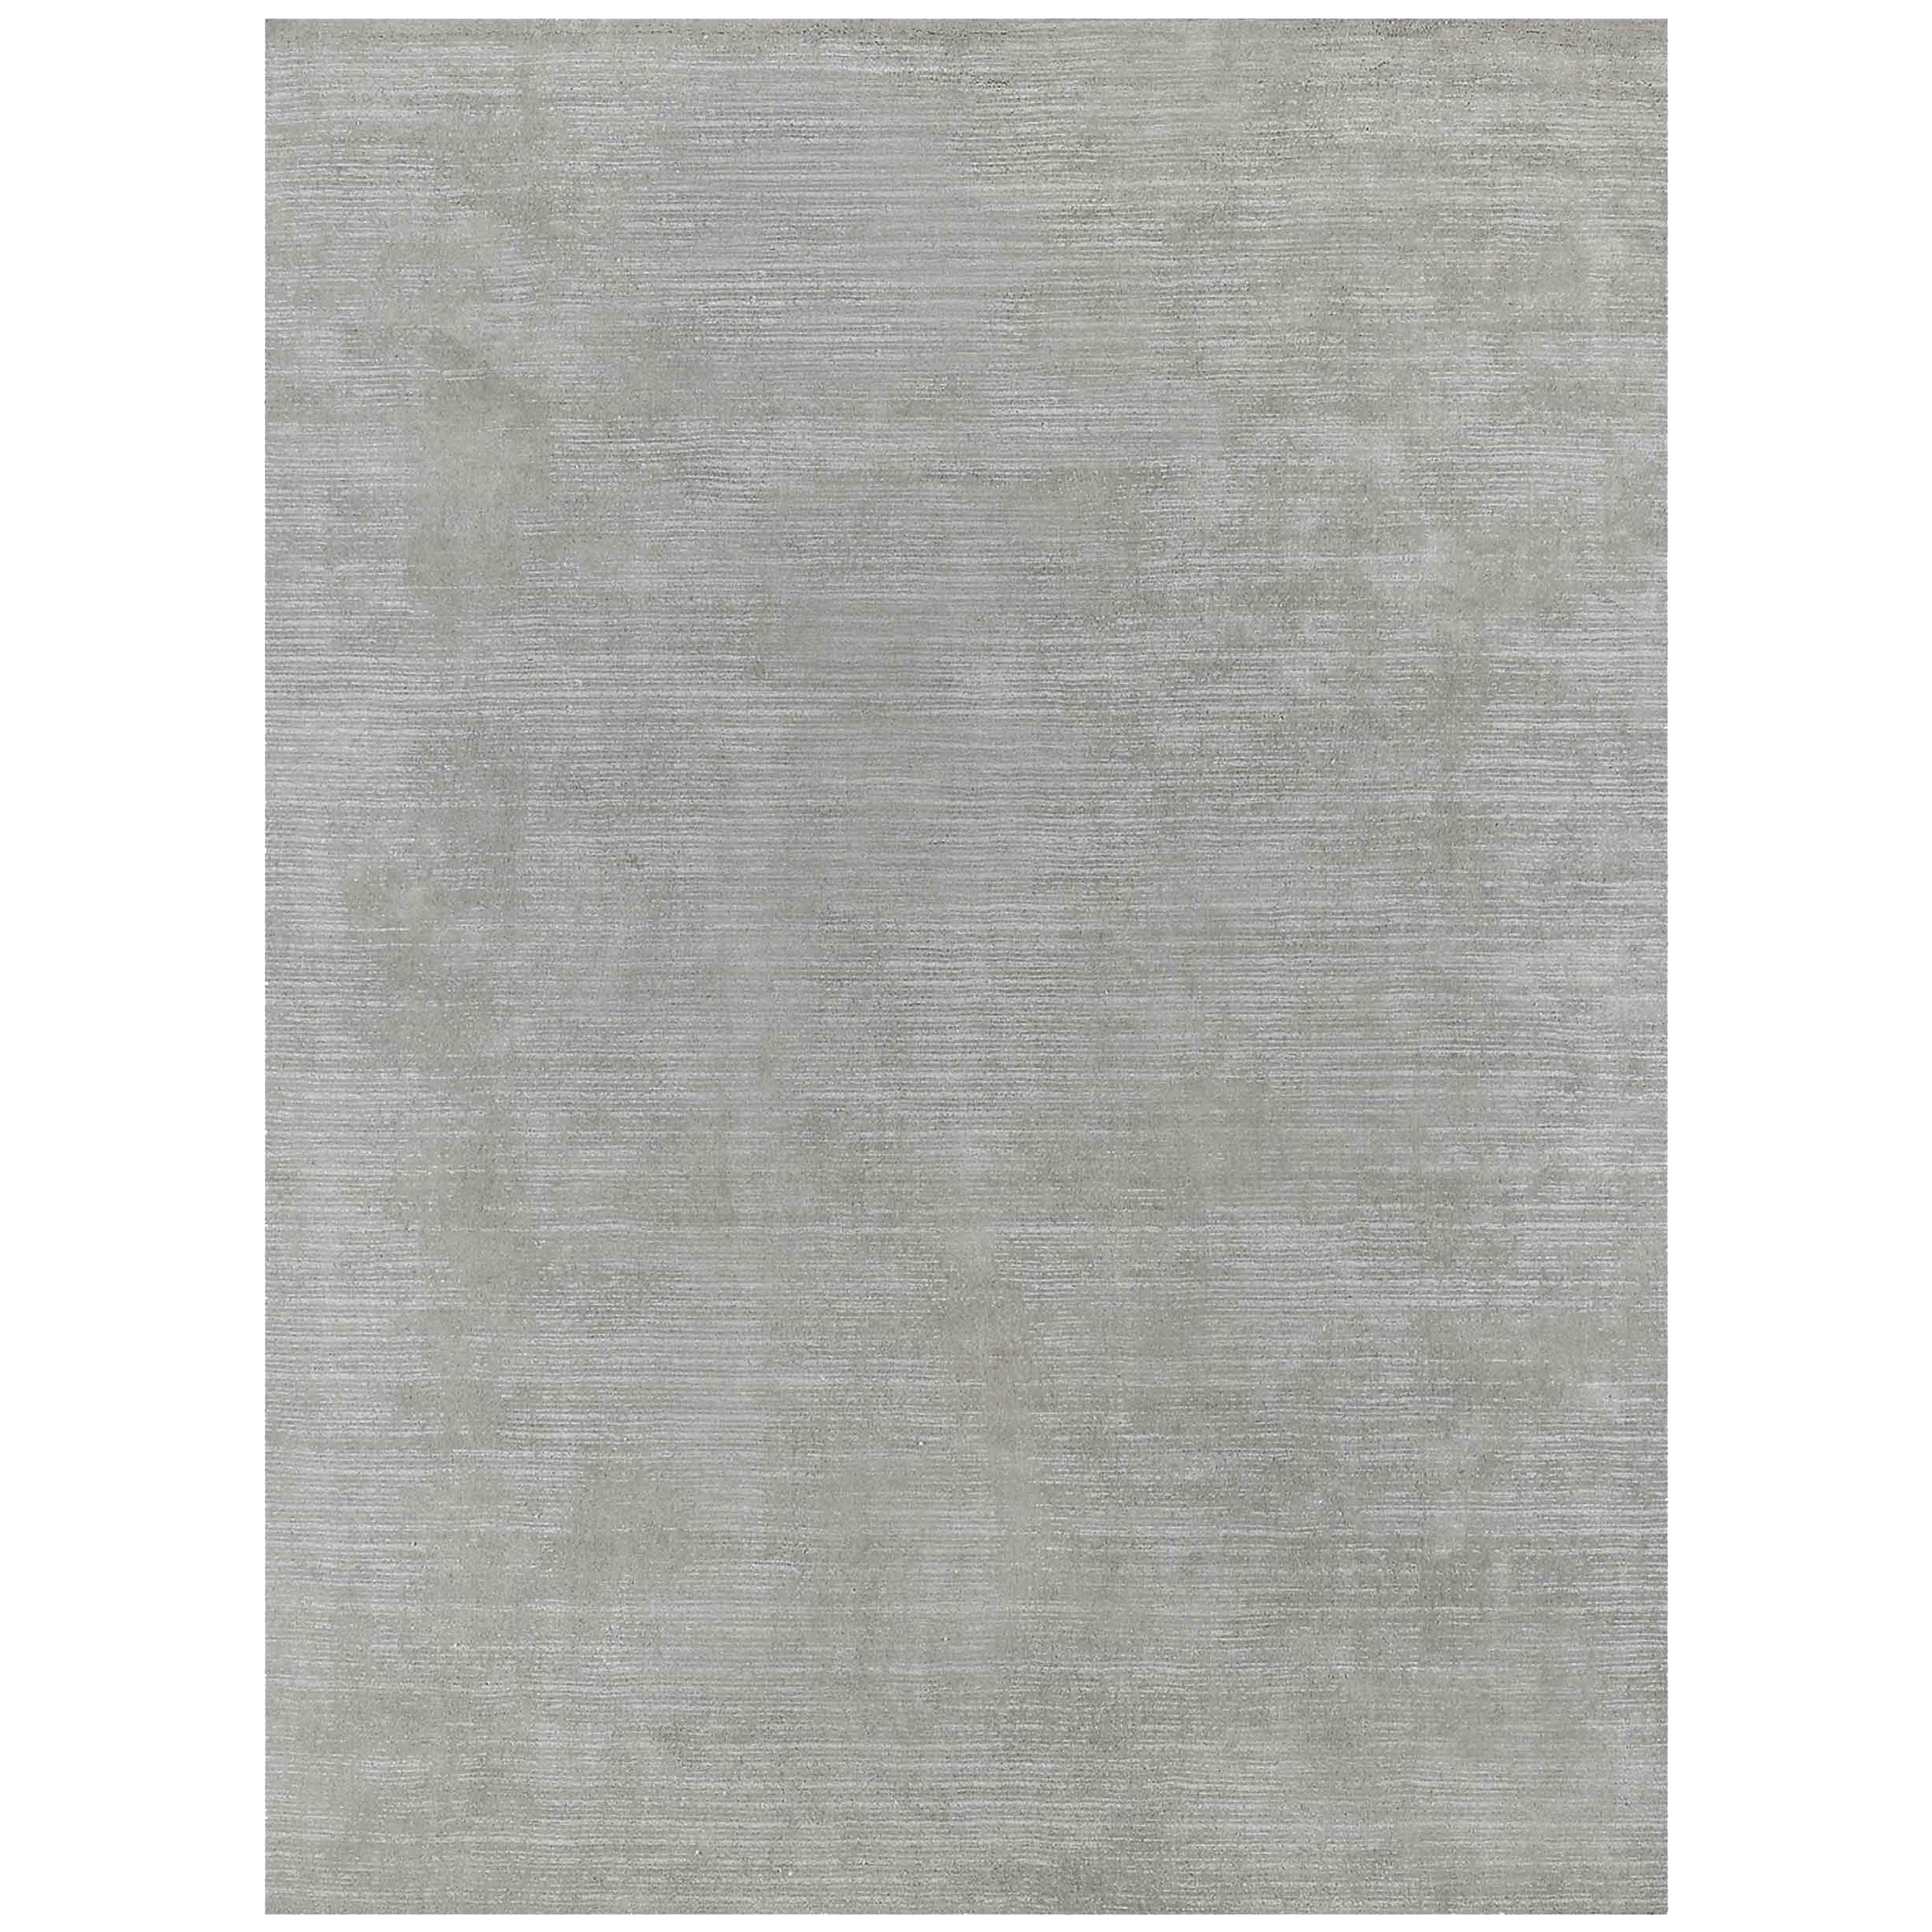 Ben Soleimani Performance Textra Rug - Grey 10'x14' For Sale